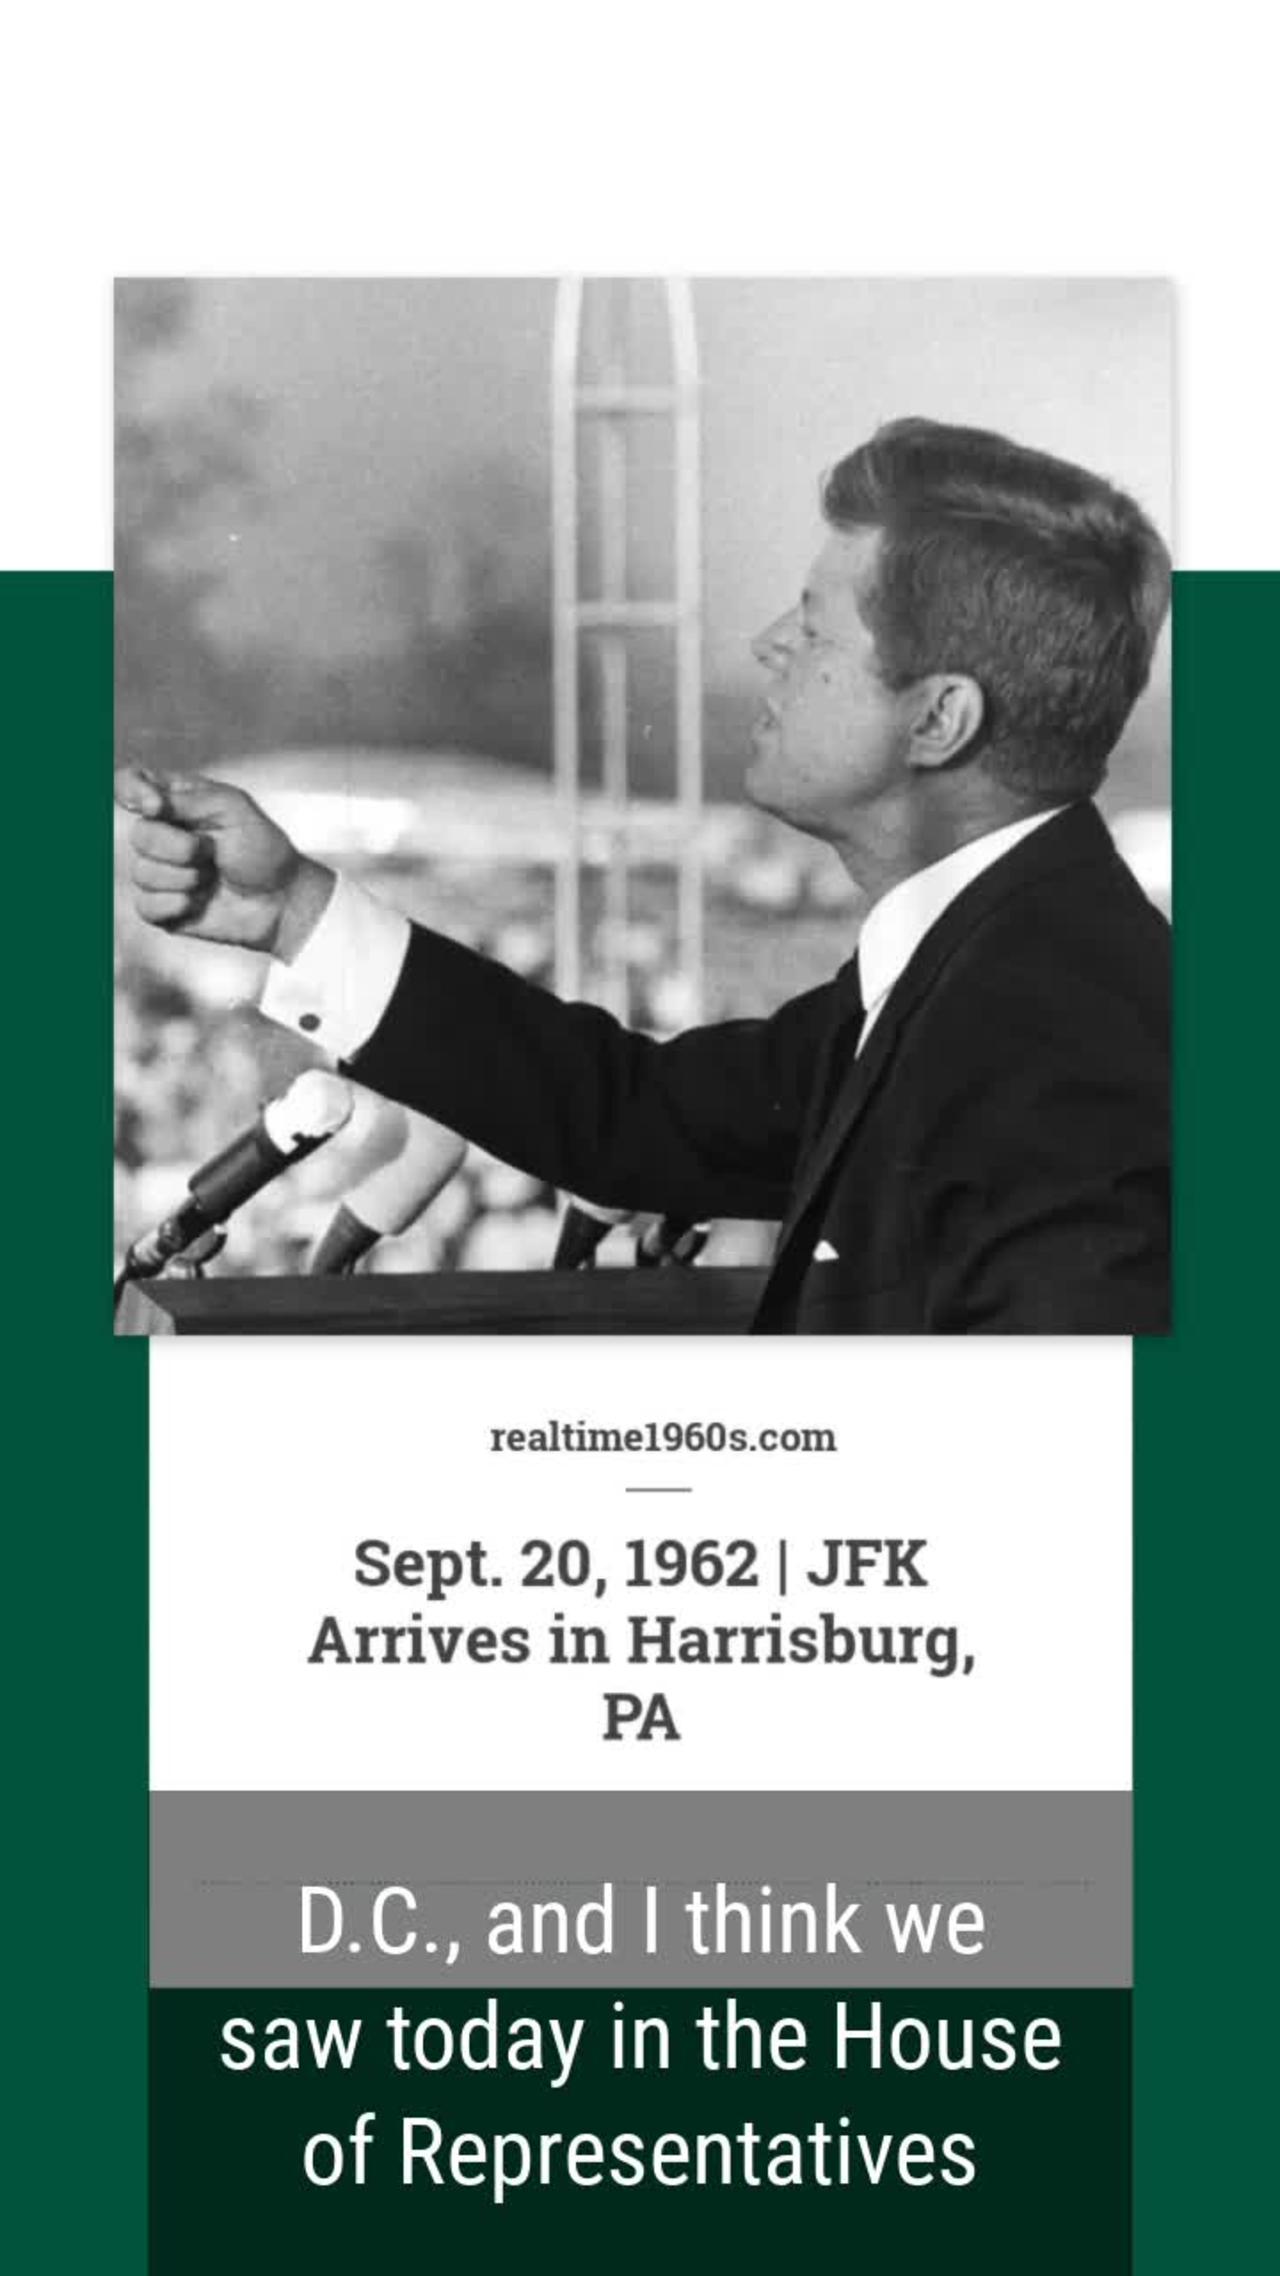 Sept. 20, 1962 - JFK Remarks Upon Arrival in Harrisburg, PA